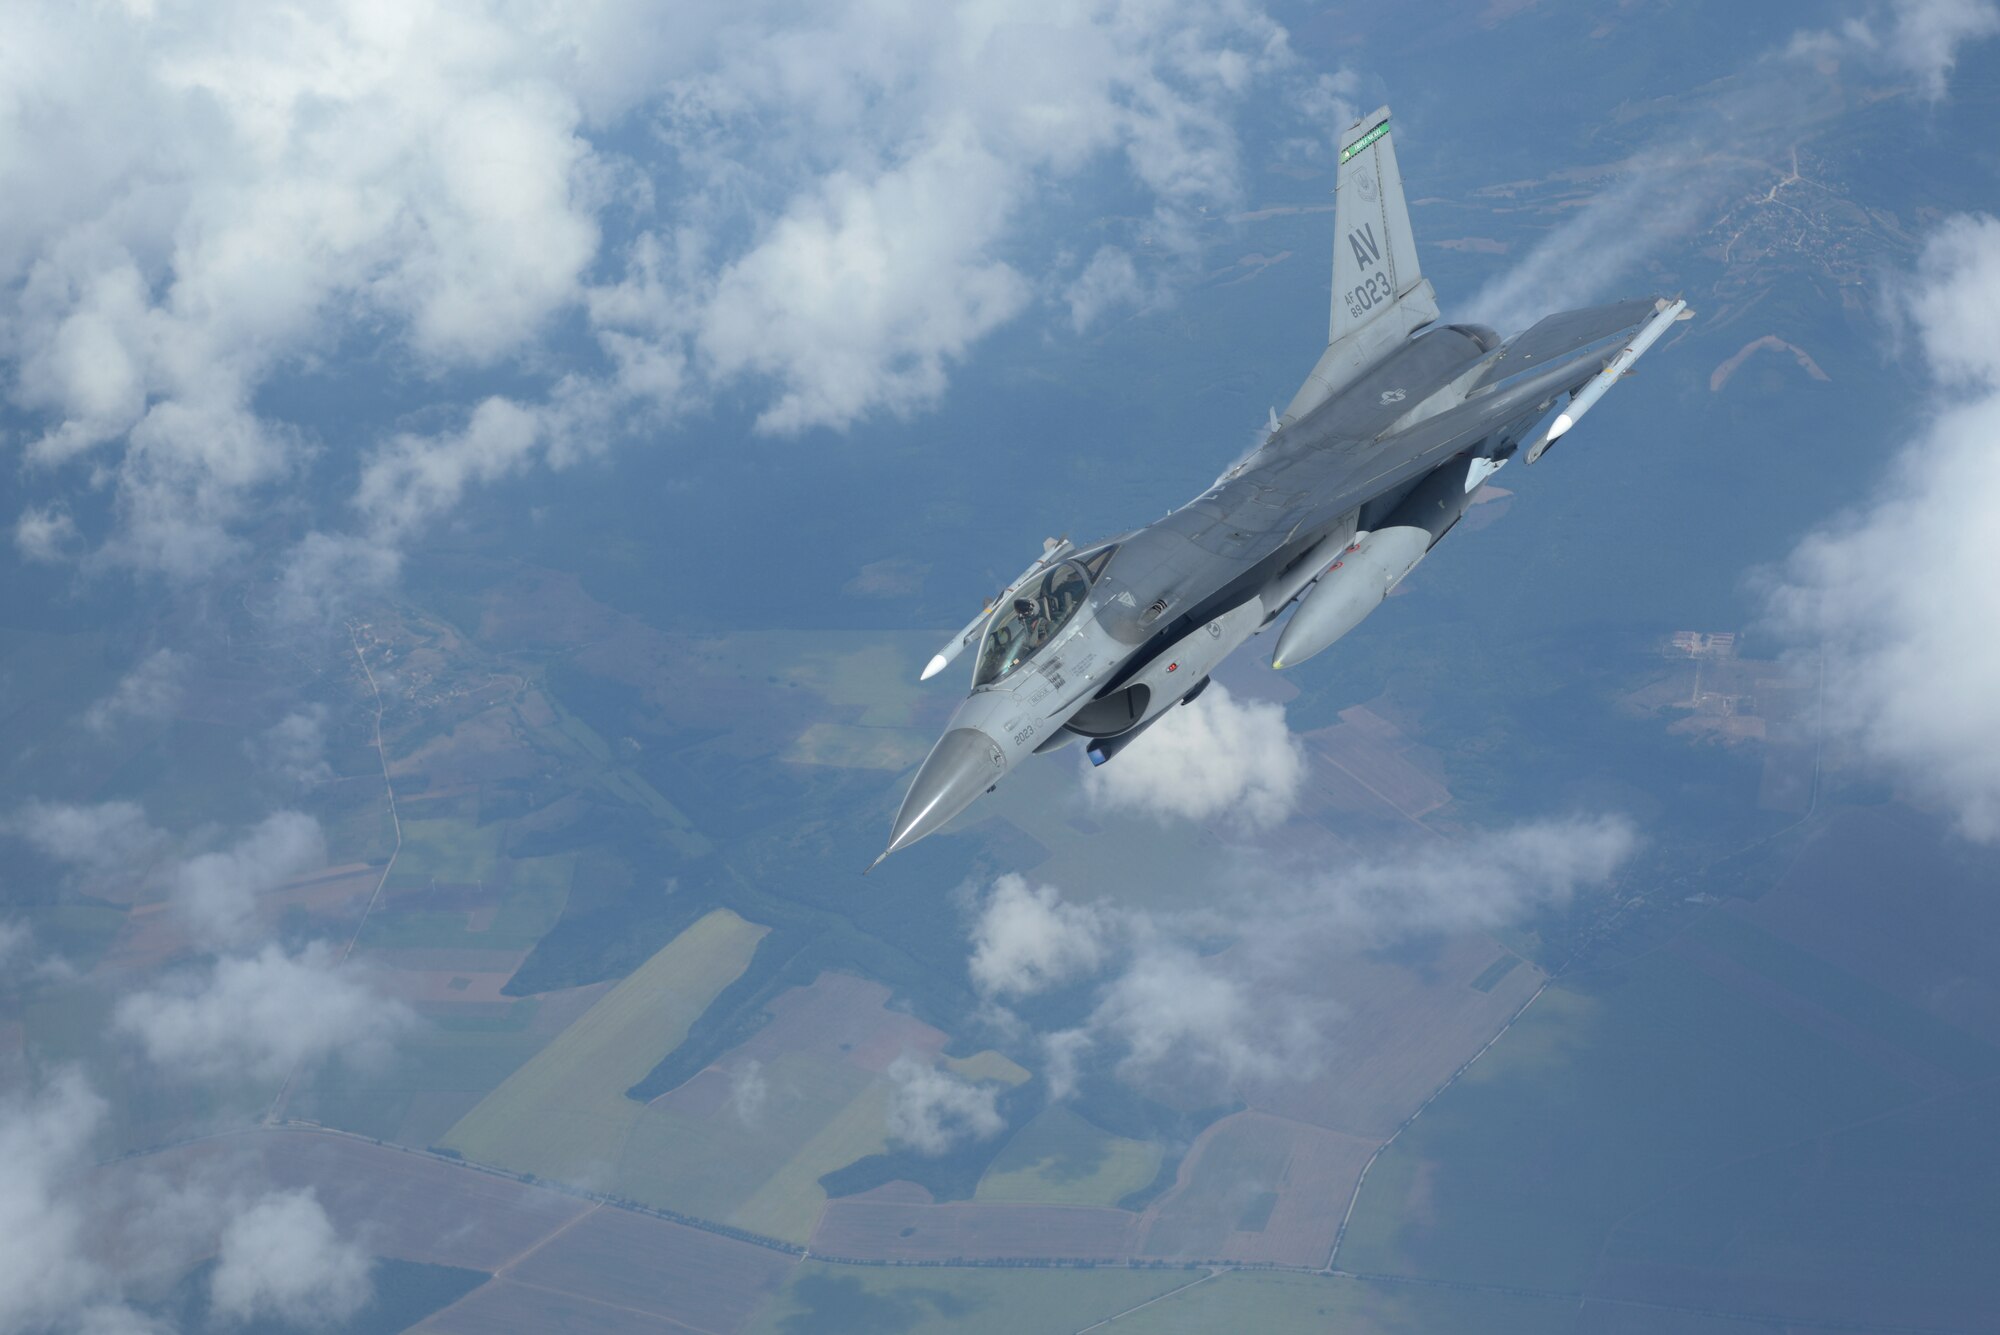 F-16 flying